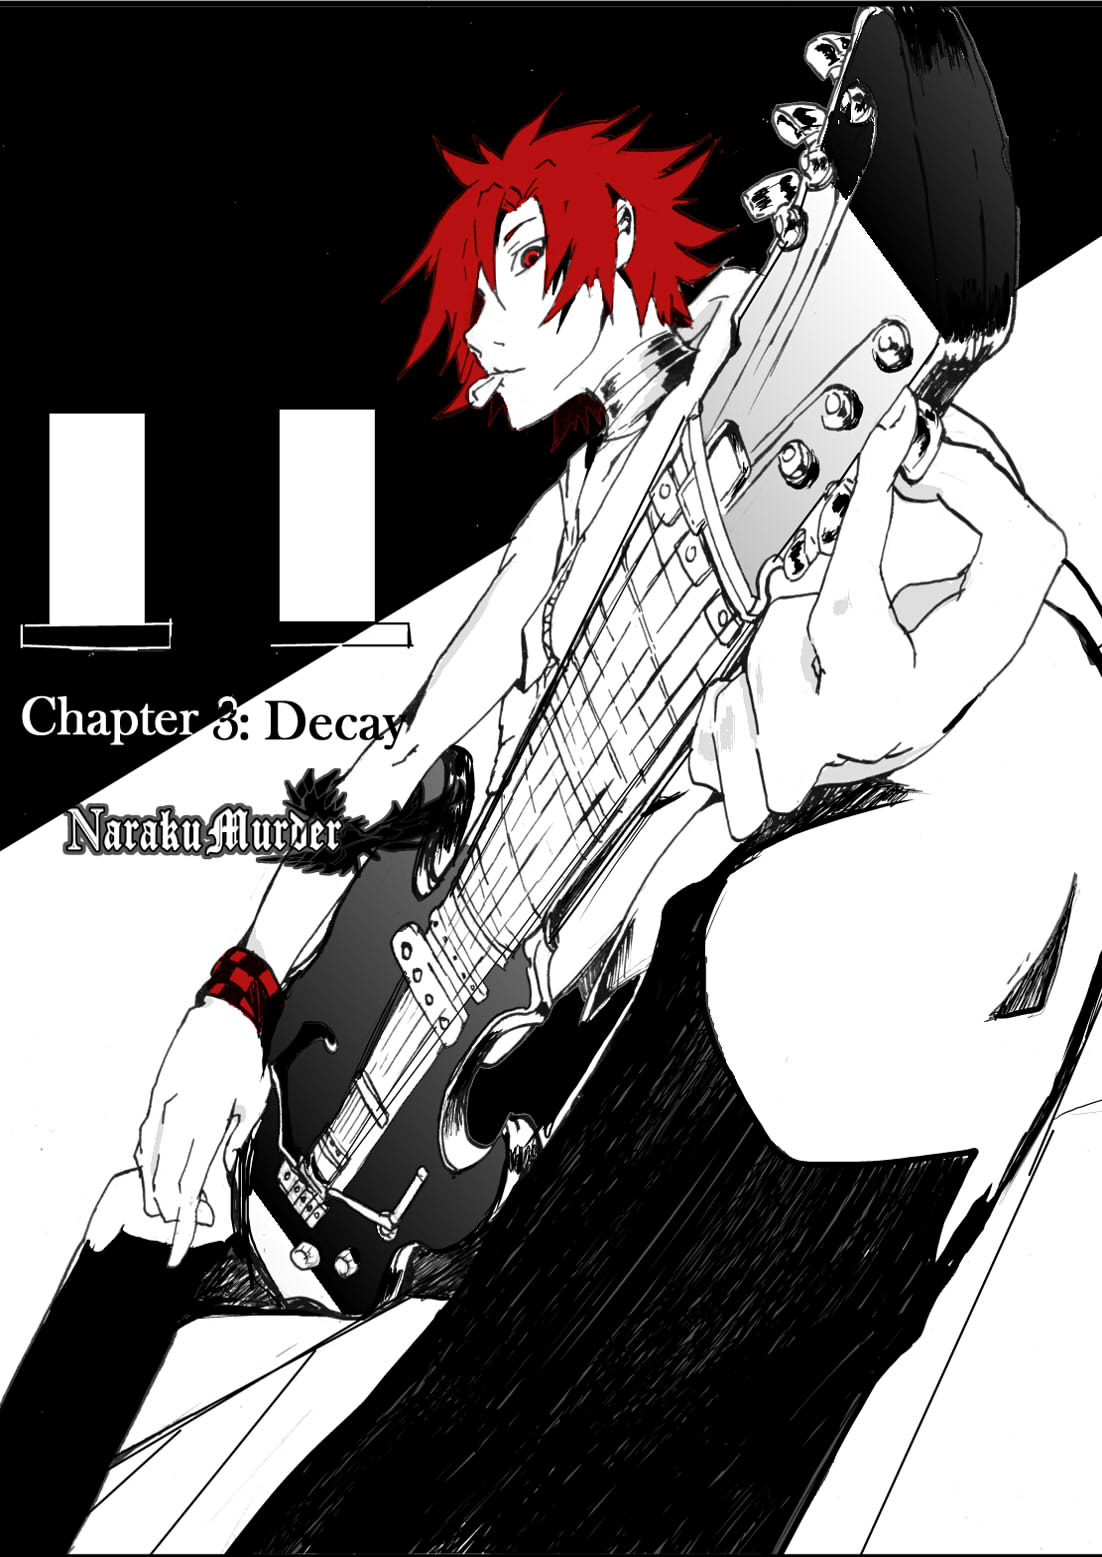 Naraku Murder - Chapter 3: Decay - 5